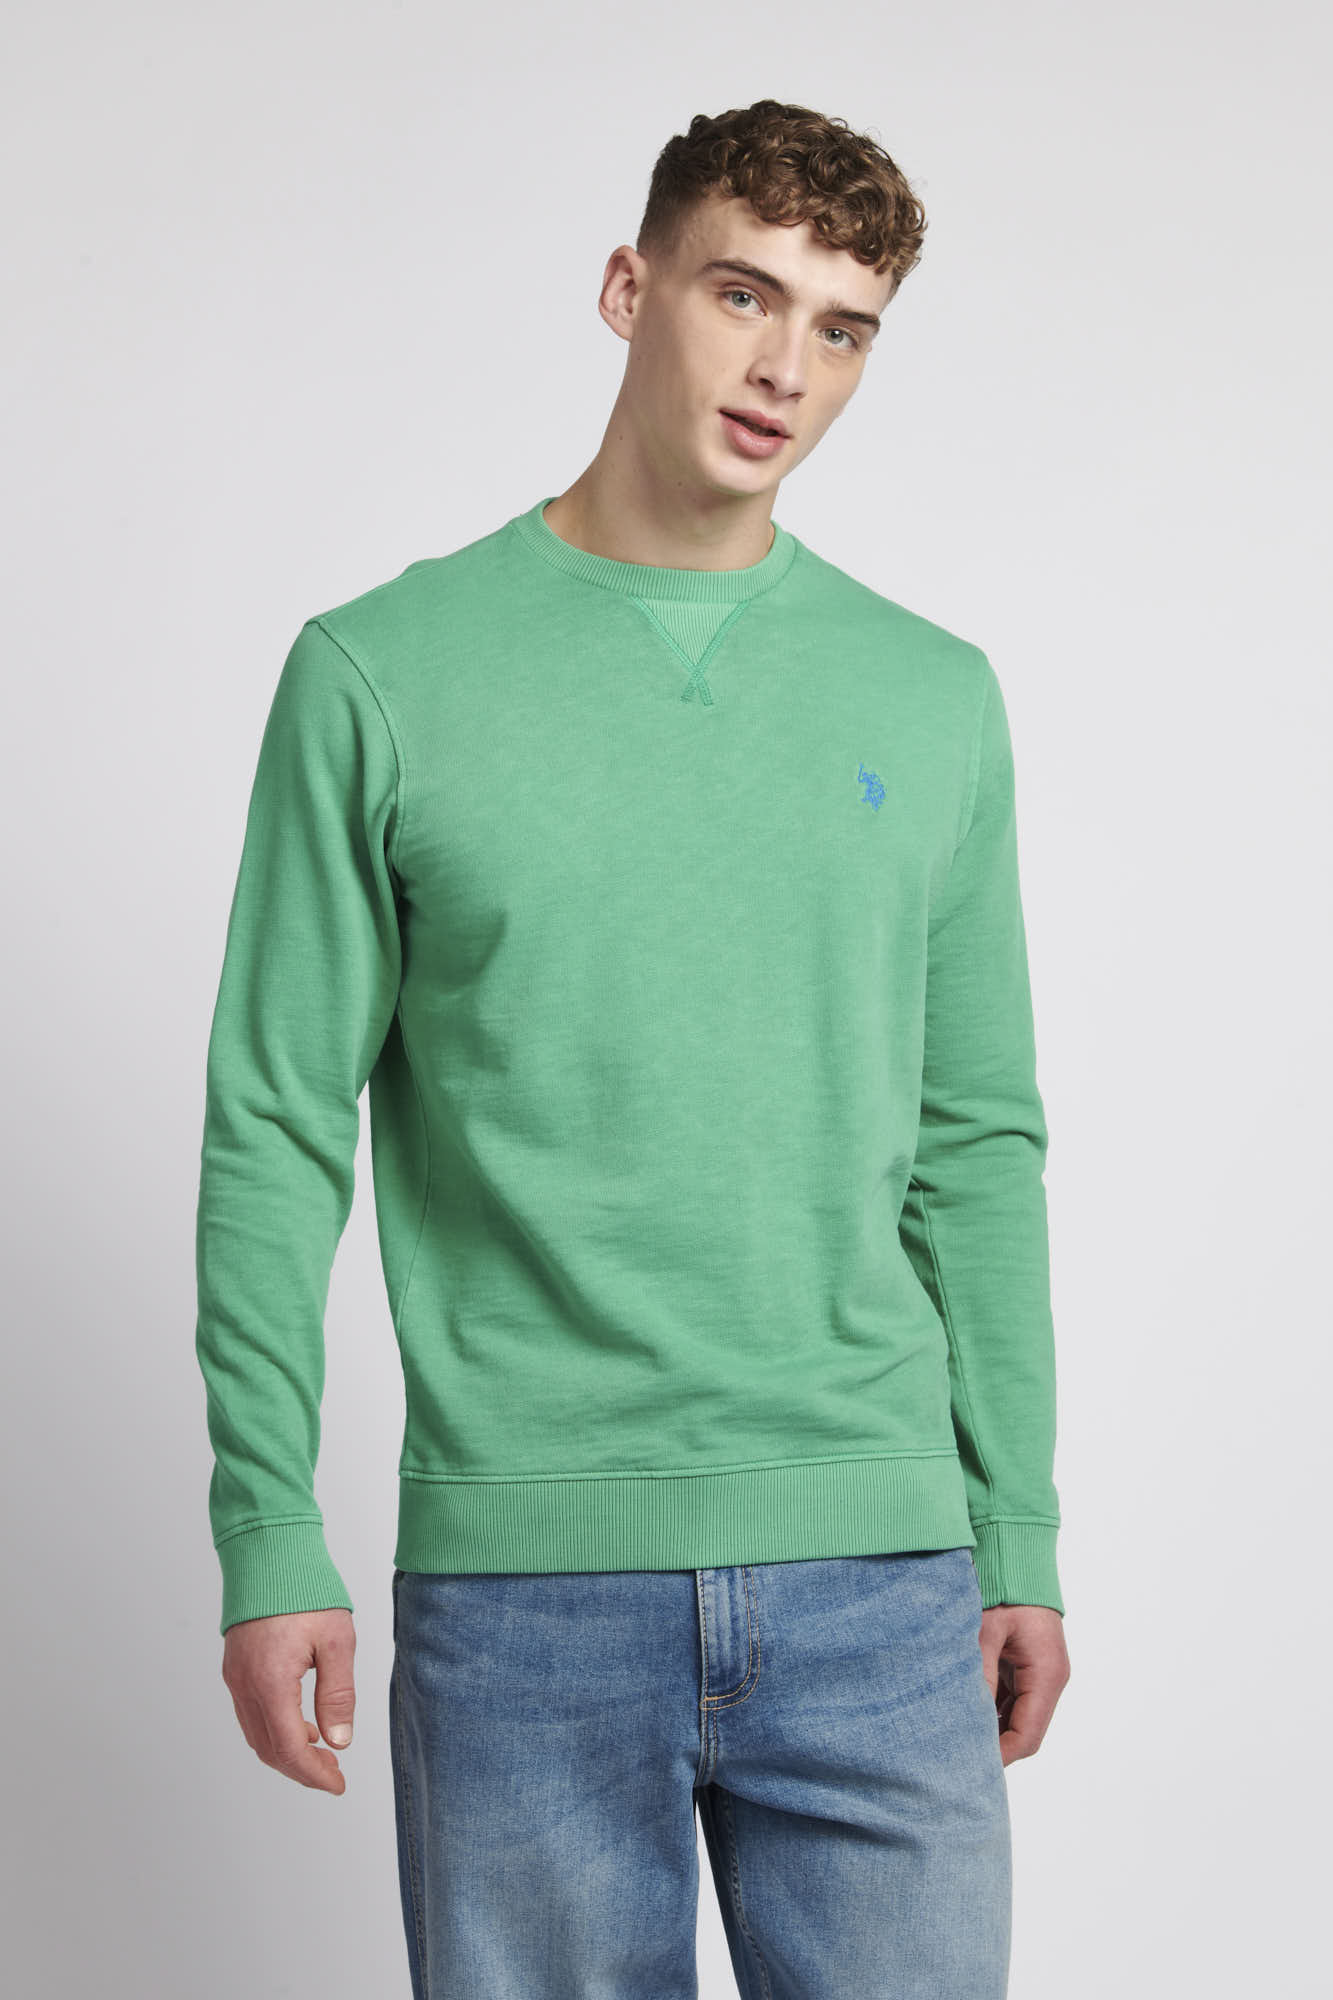 Mens Garment Dye Crew Neck Sweatshirt in Golf Green